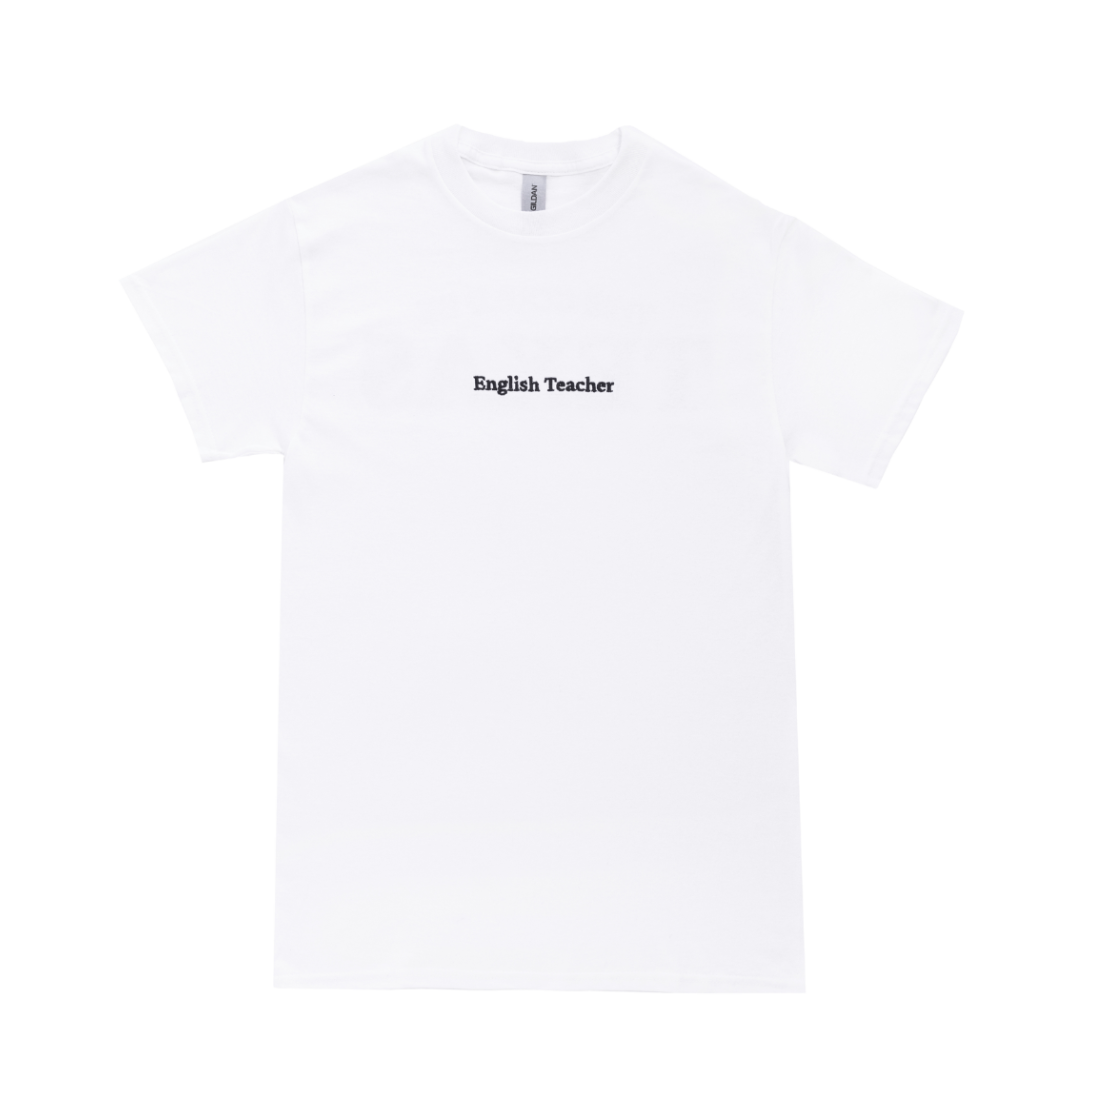 English Teacher - English Teacher Embroidered White T-shirt